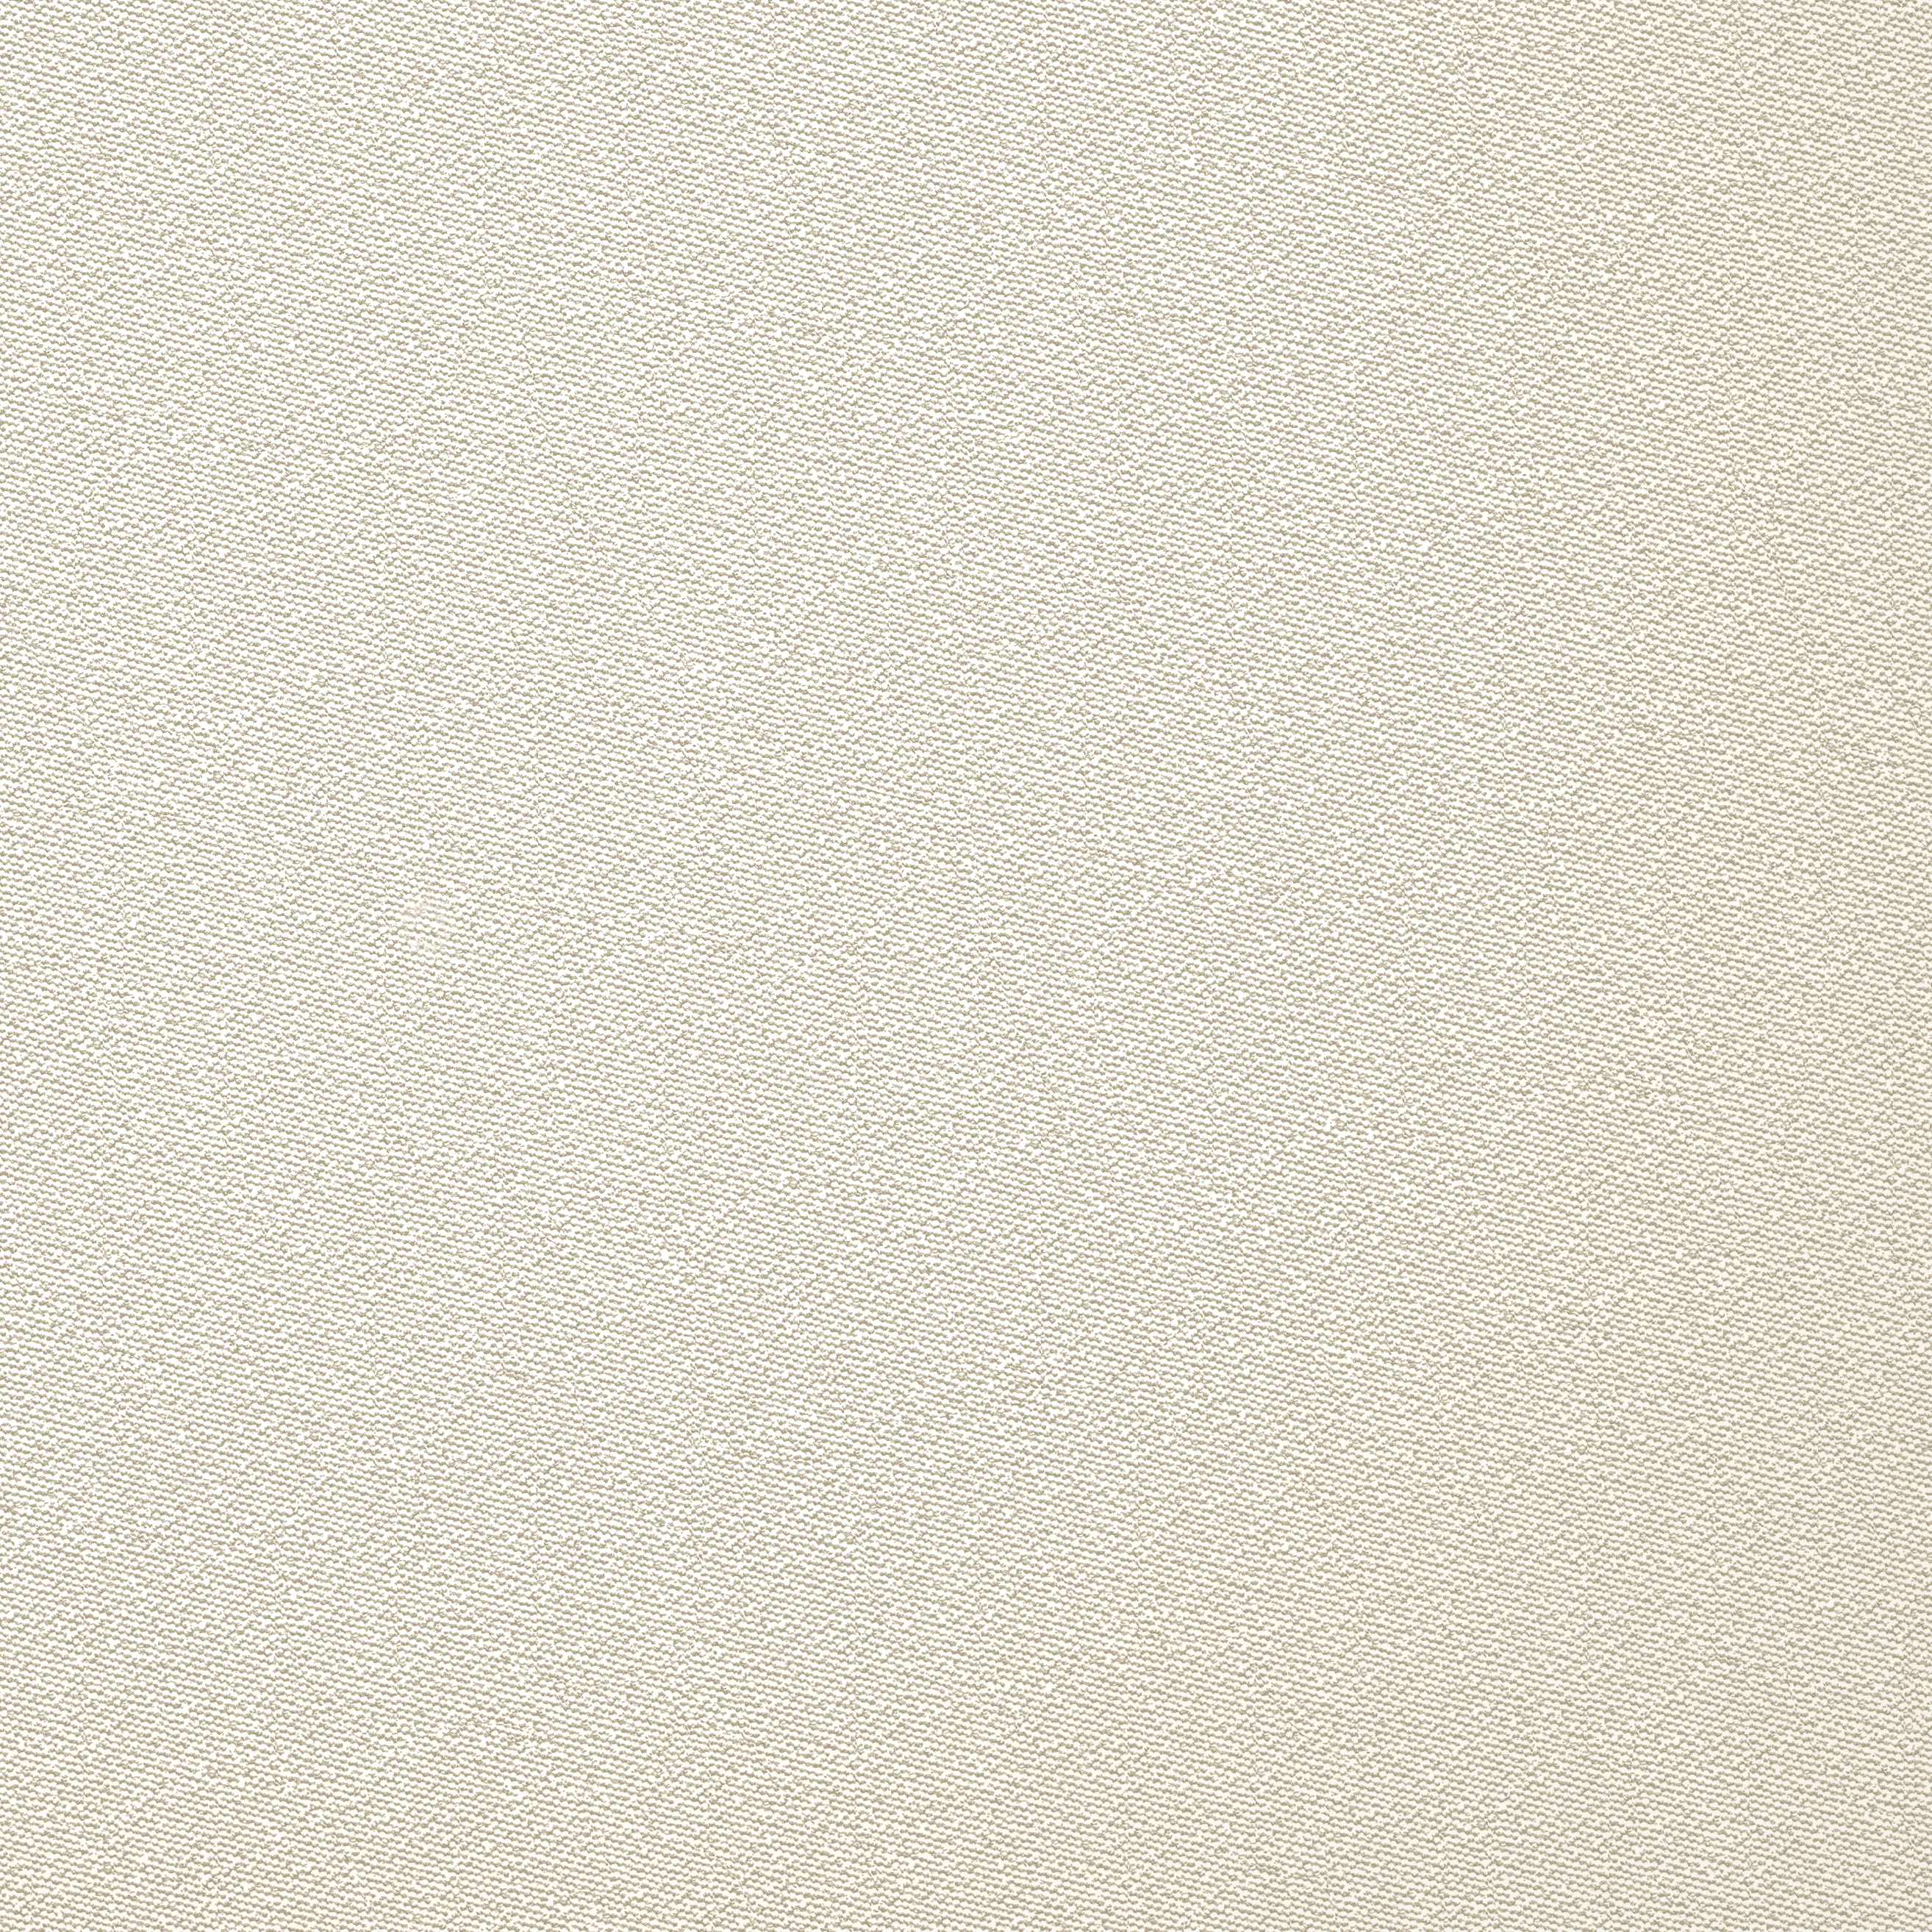 Image of Holden Decor Allora Texture Cream Wallpaper - 10.05m x 53cm